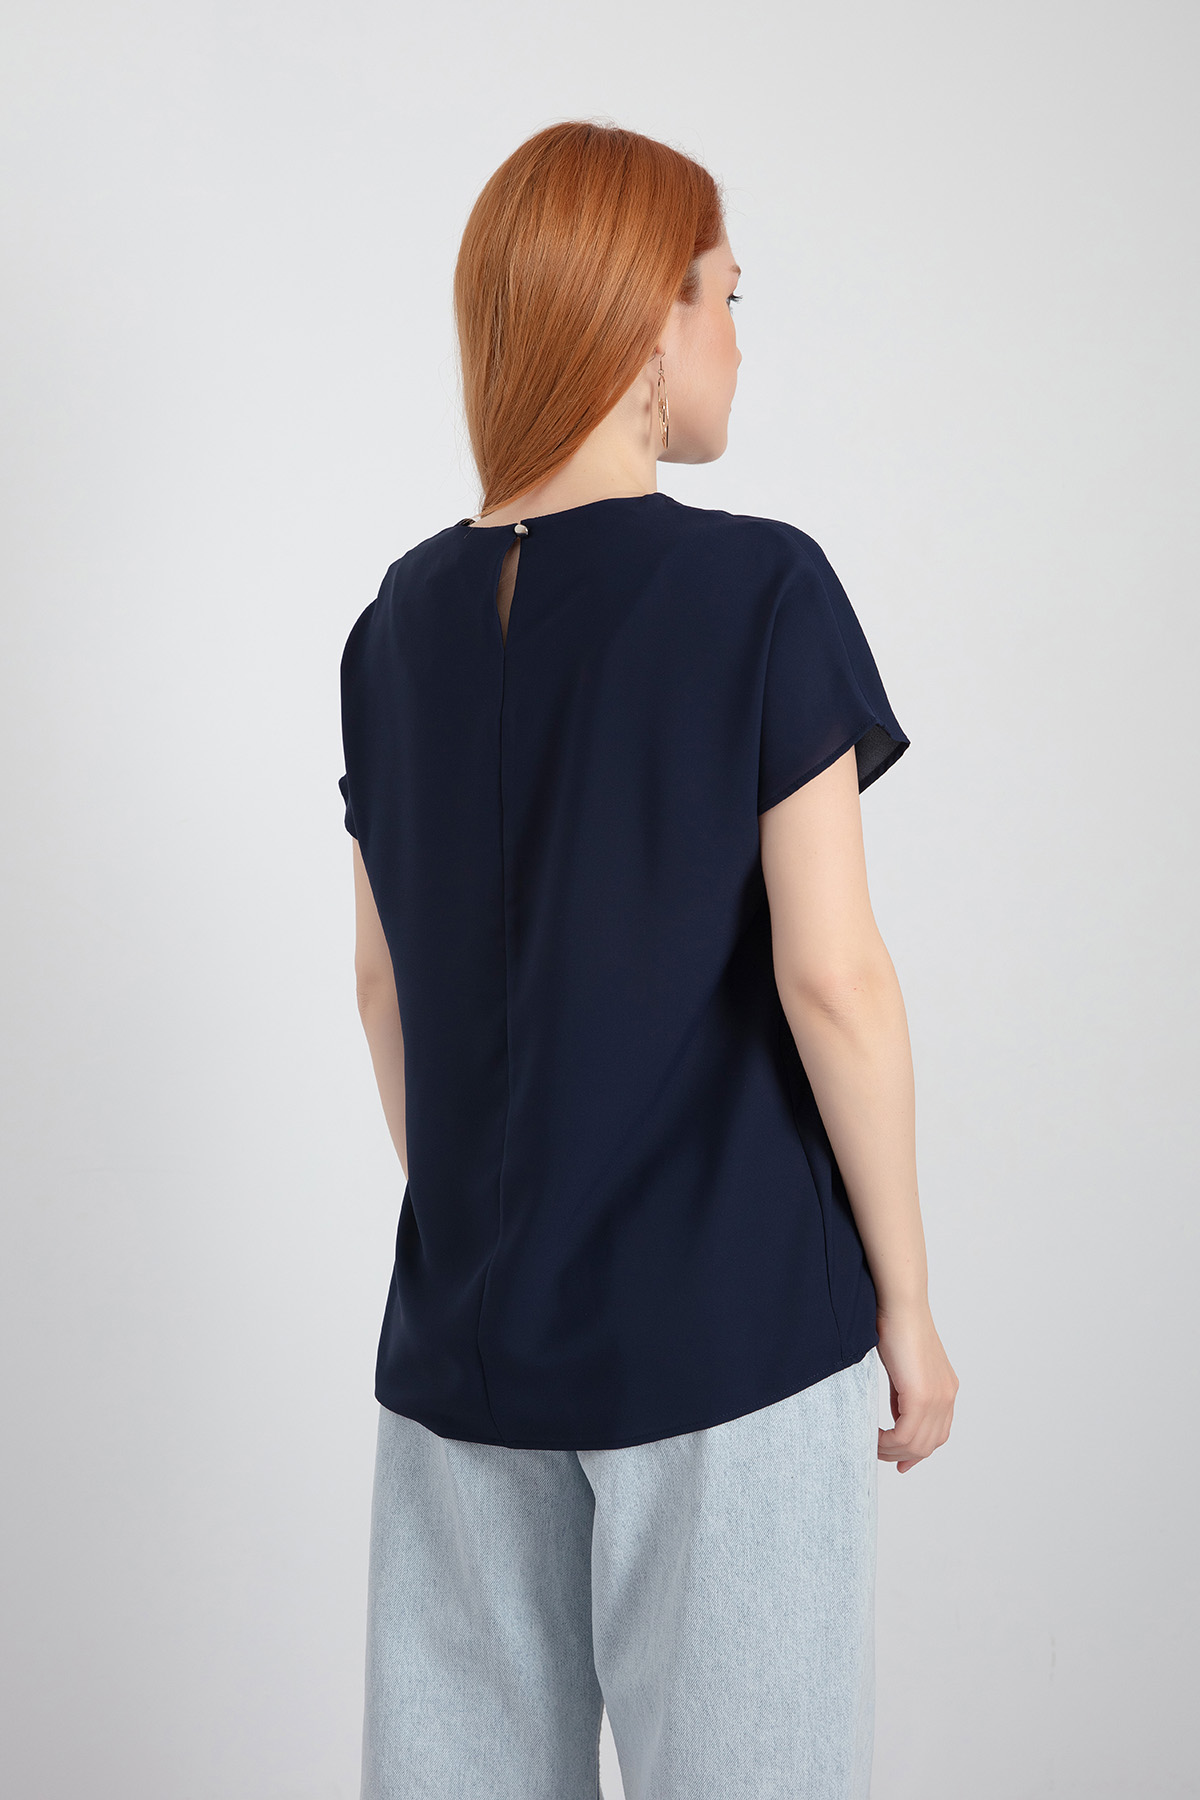 Women's Navy Blue Short Sleeve Blouse